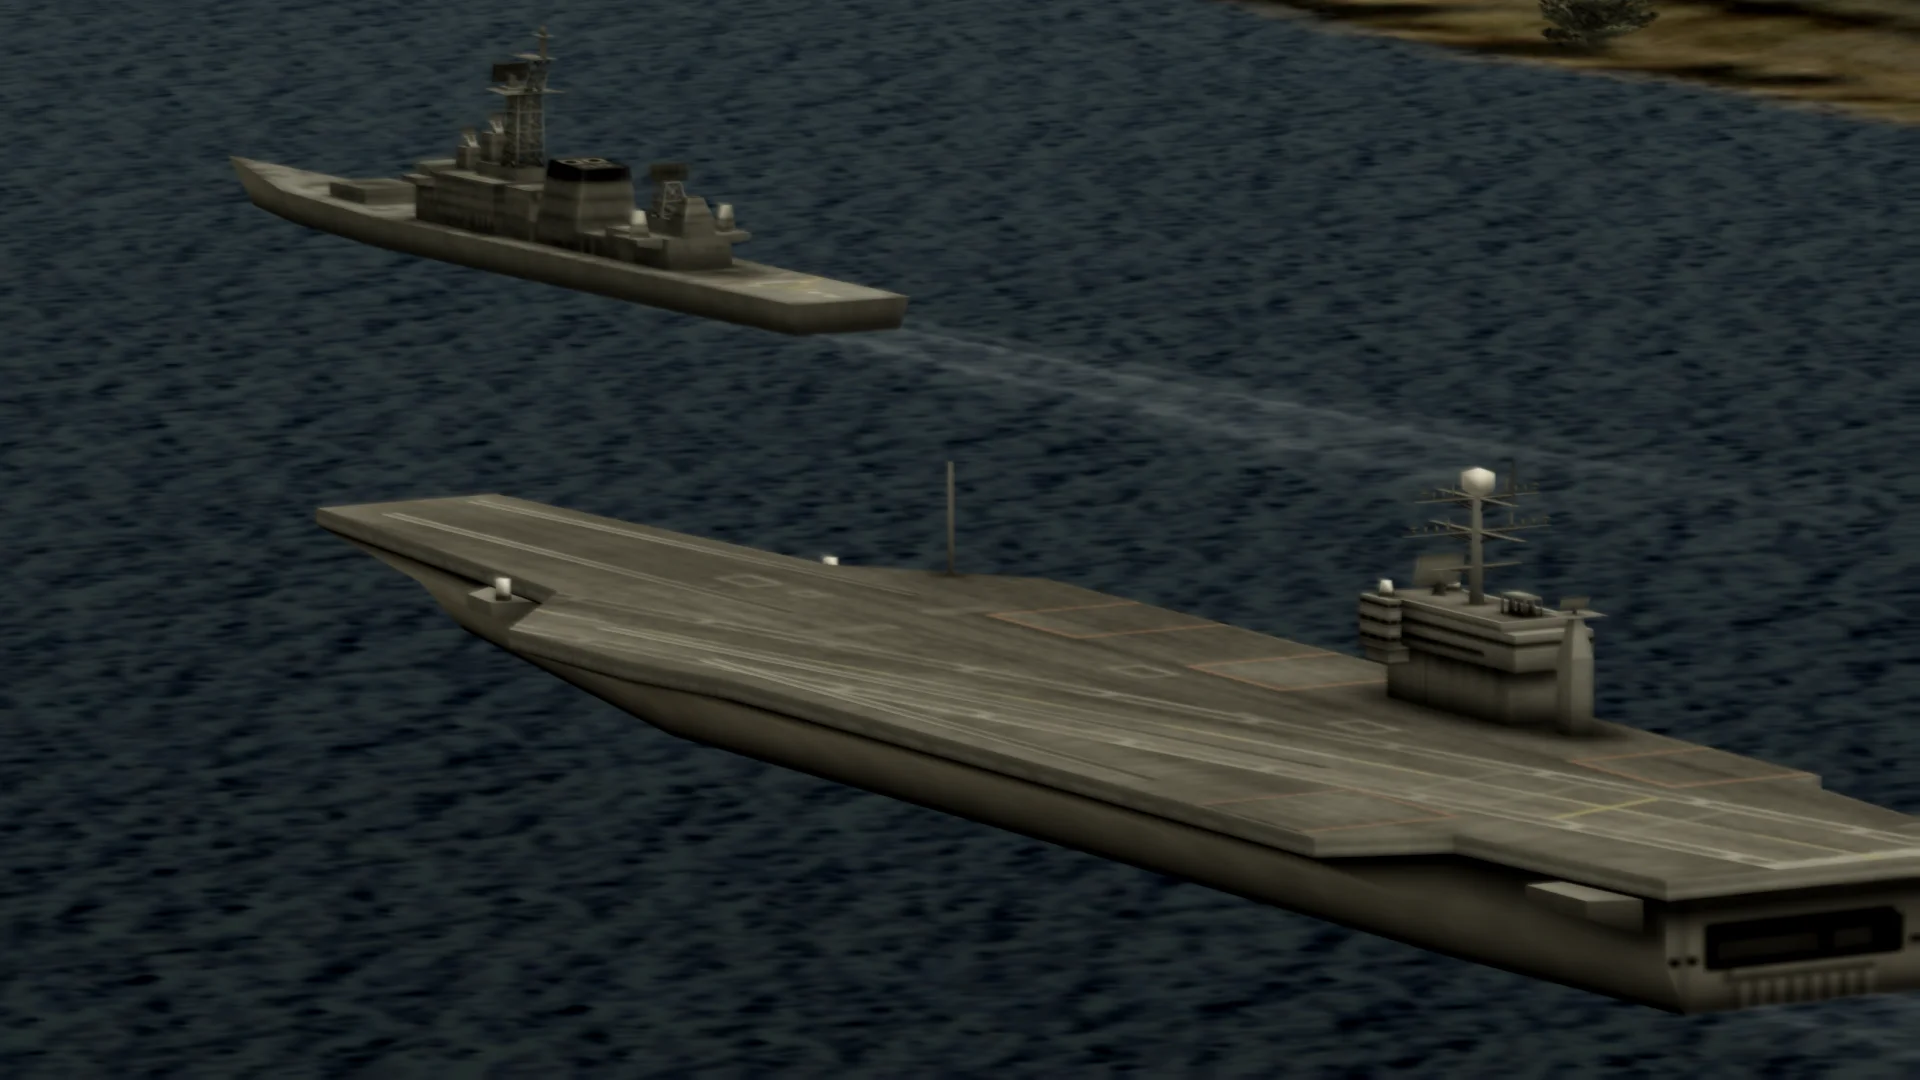 OFS Kestrel与一艘护卫舰正在通过Futuro运河的近照